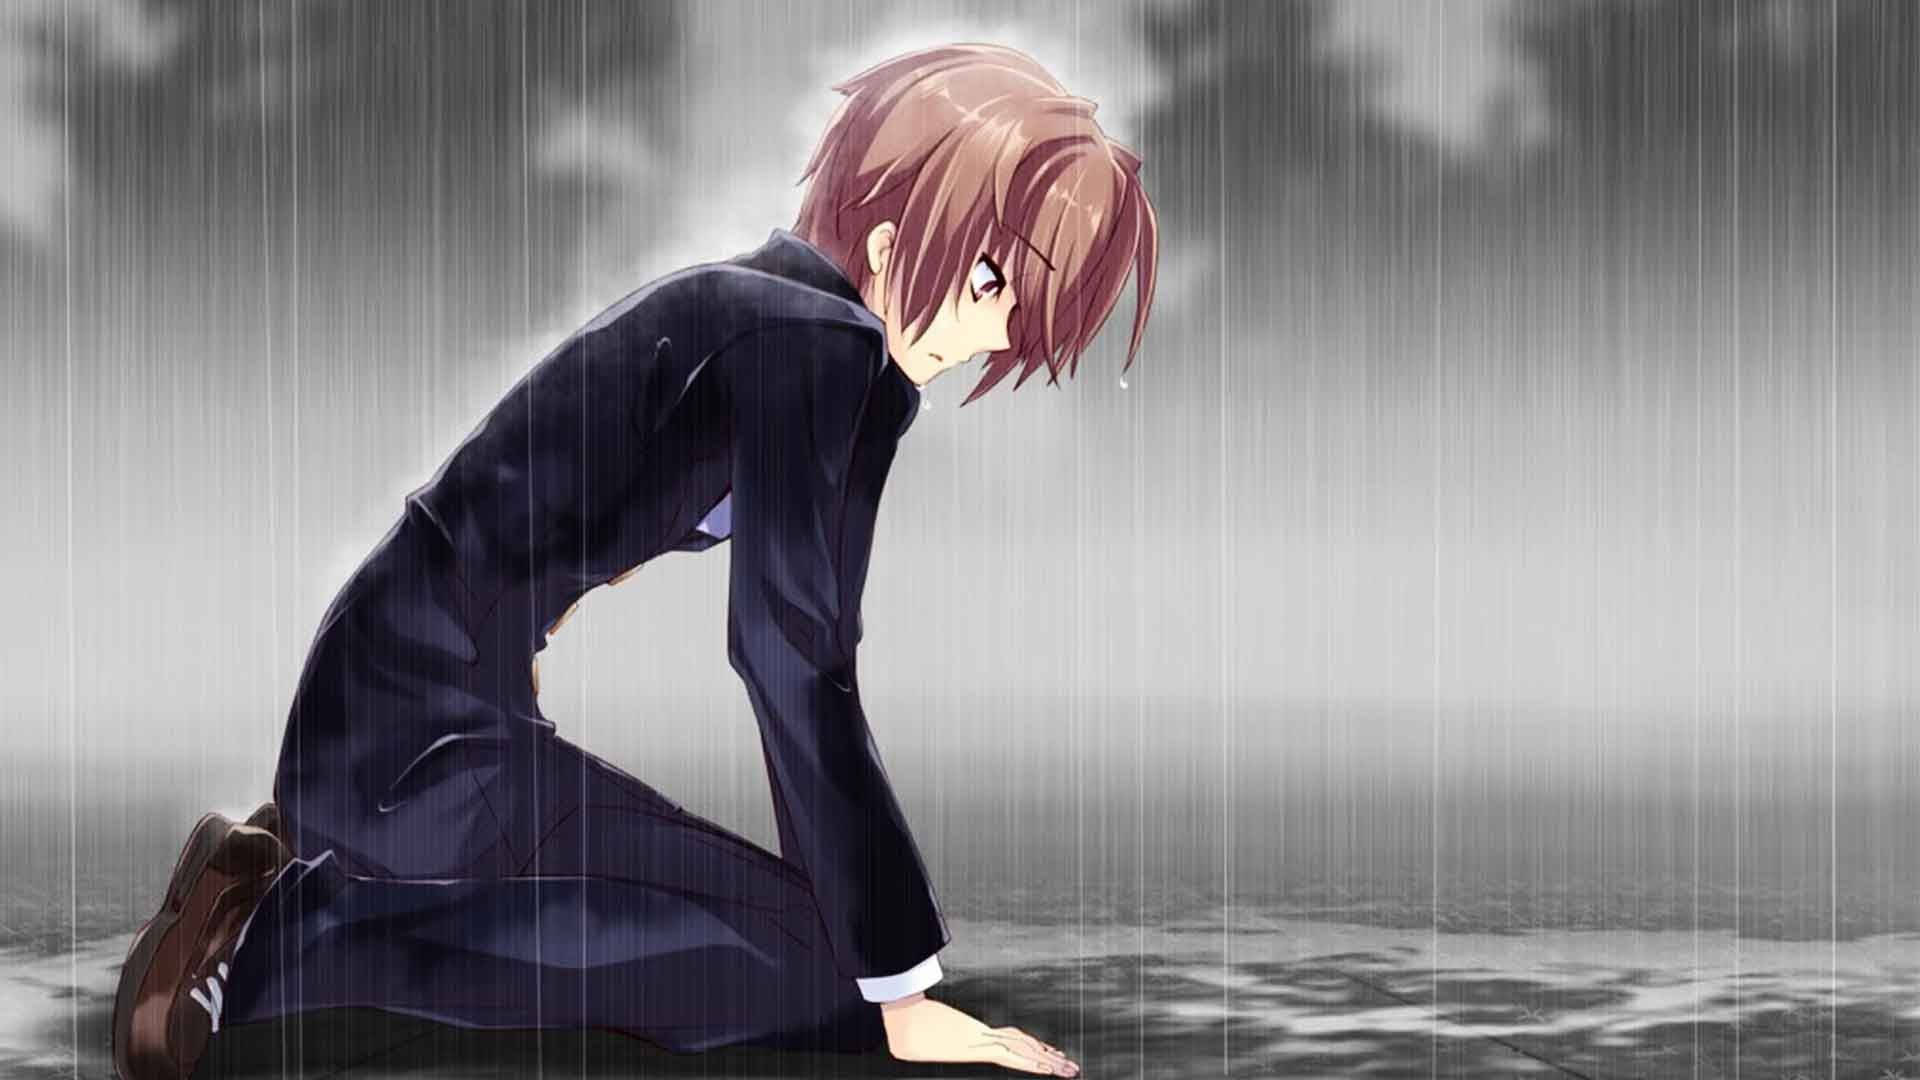 In The Rain Anime Boy Sad Aesthetic Background